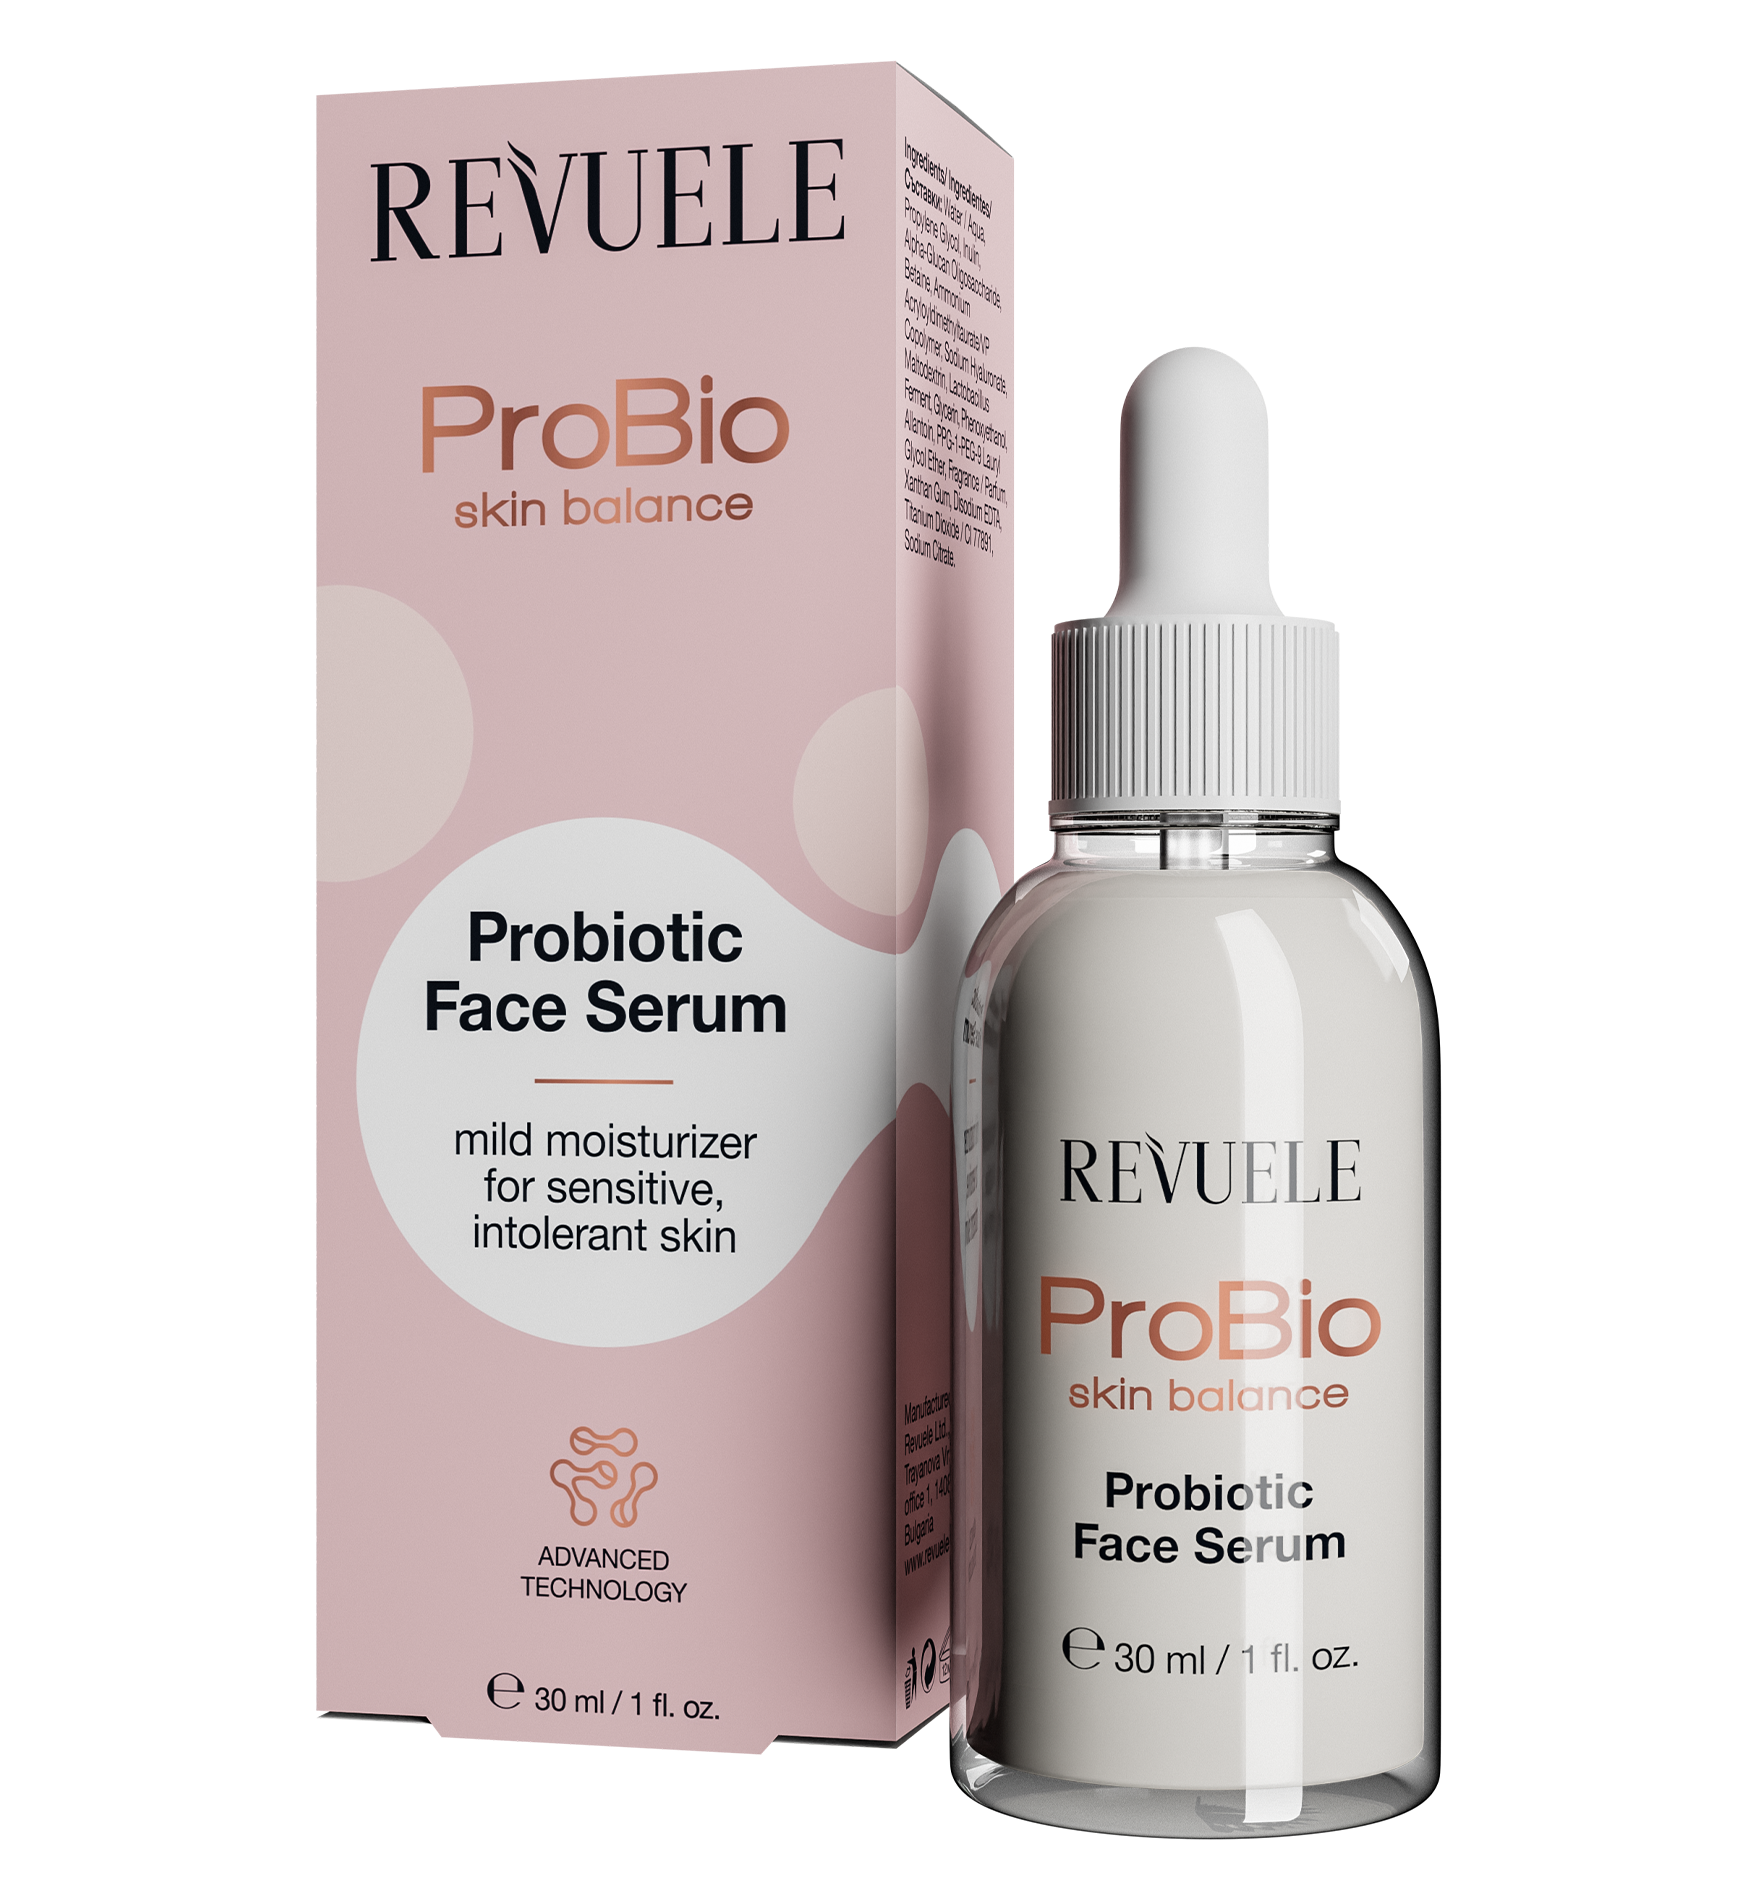 Revuele probio skin balance probiotic face serum 30ml